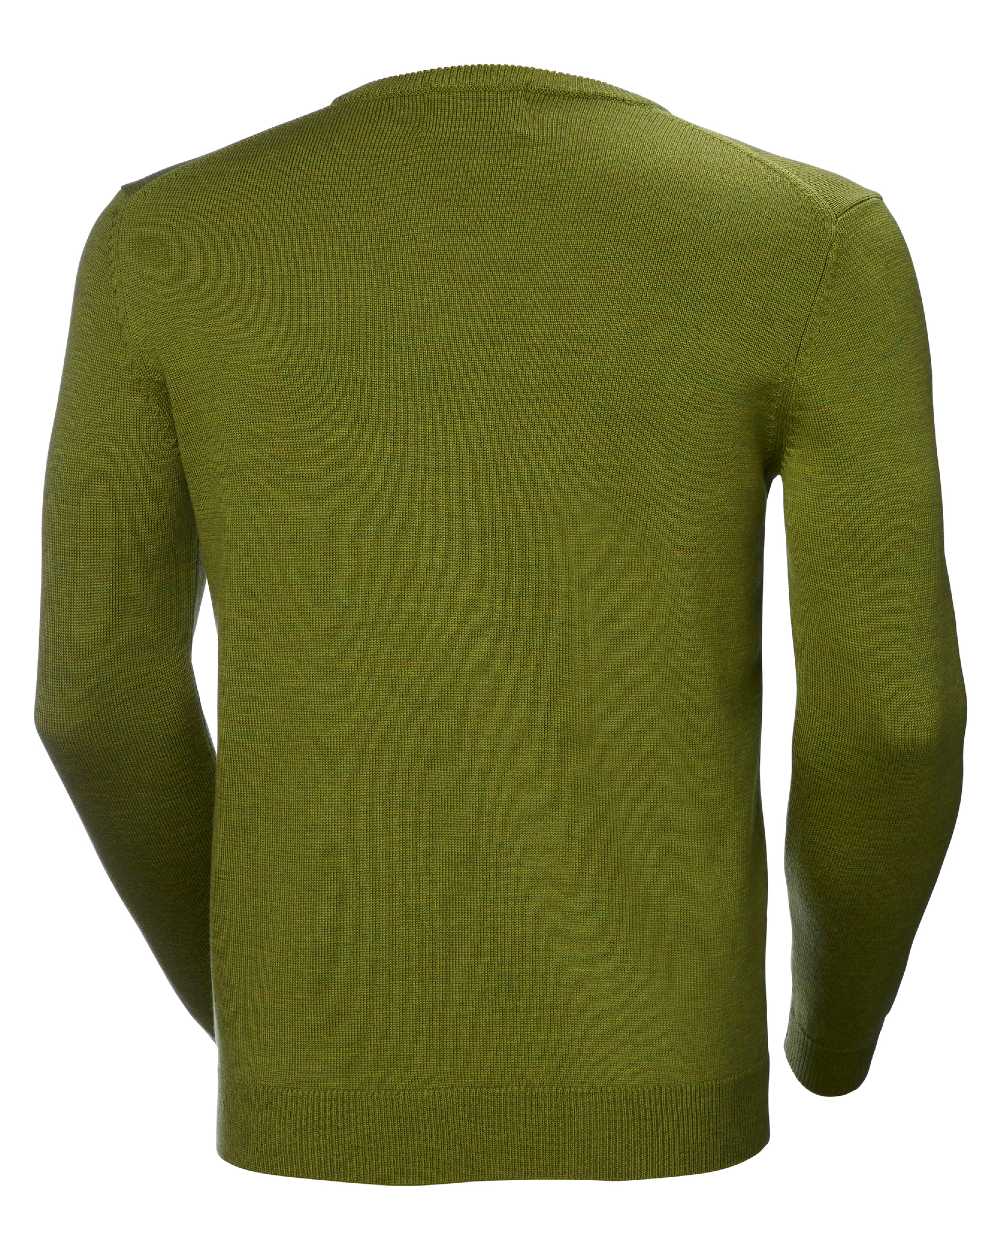 Olive Green coloured Helly Hansen Mens Shore Merino Sweater on White Background 